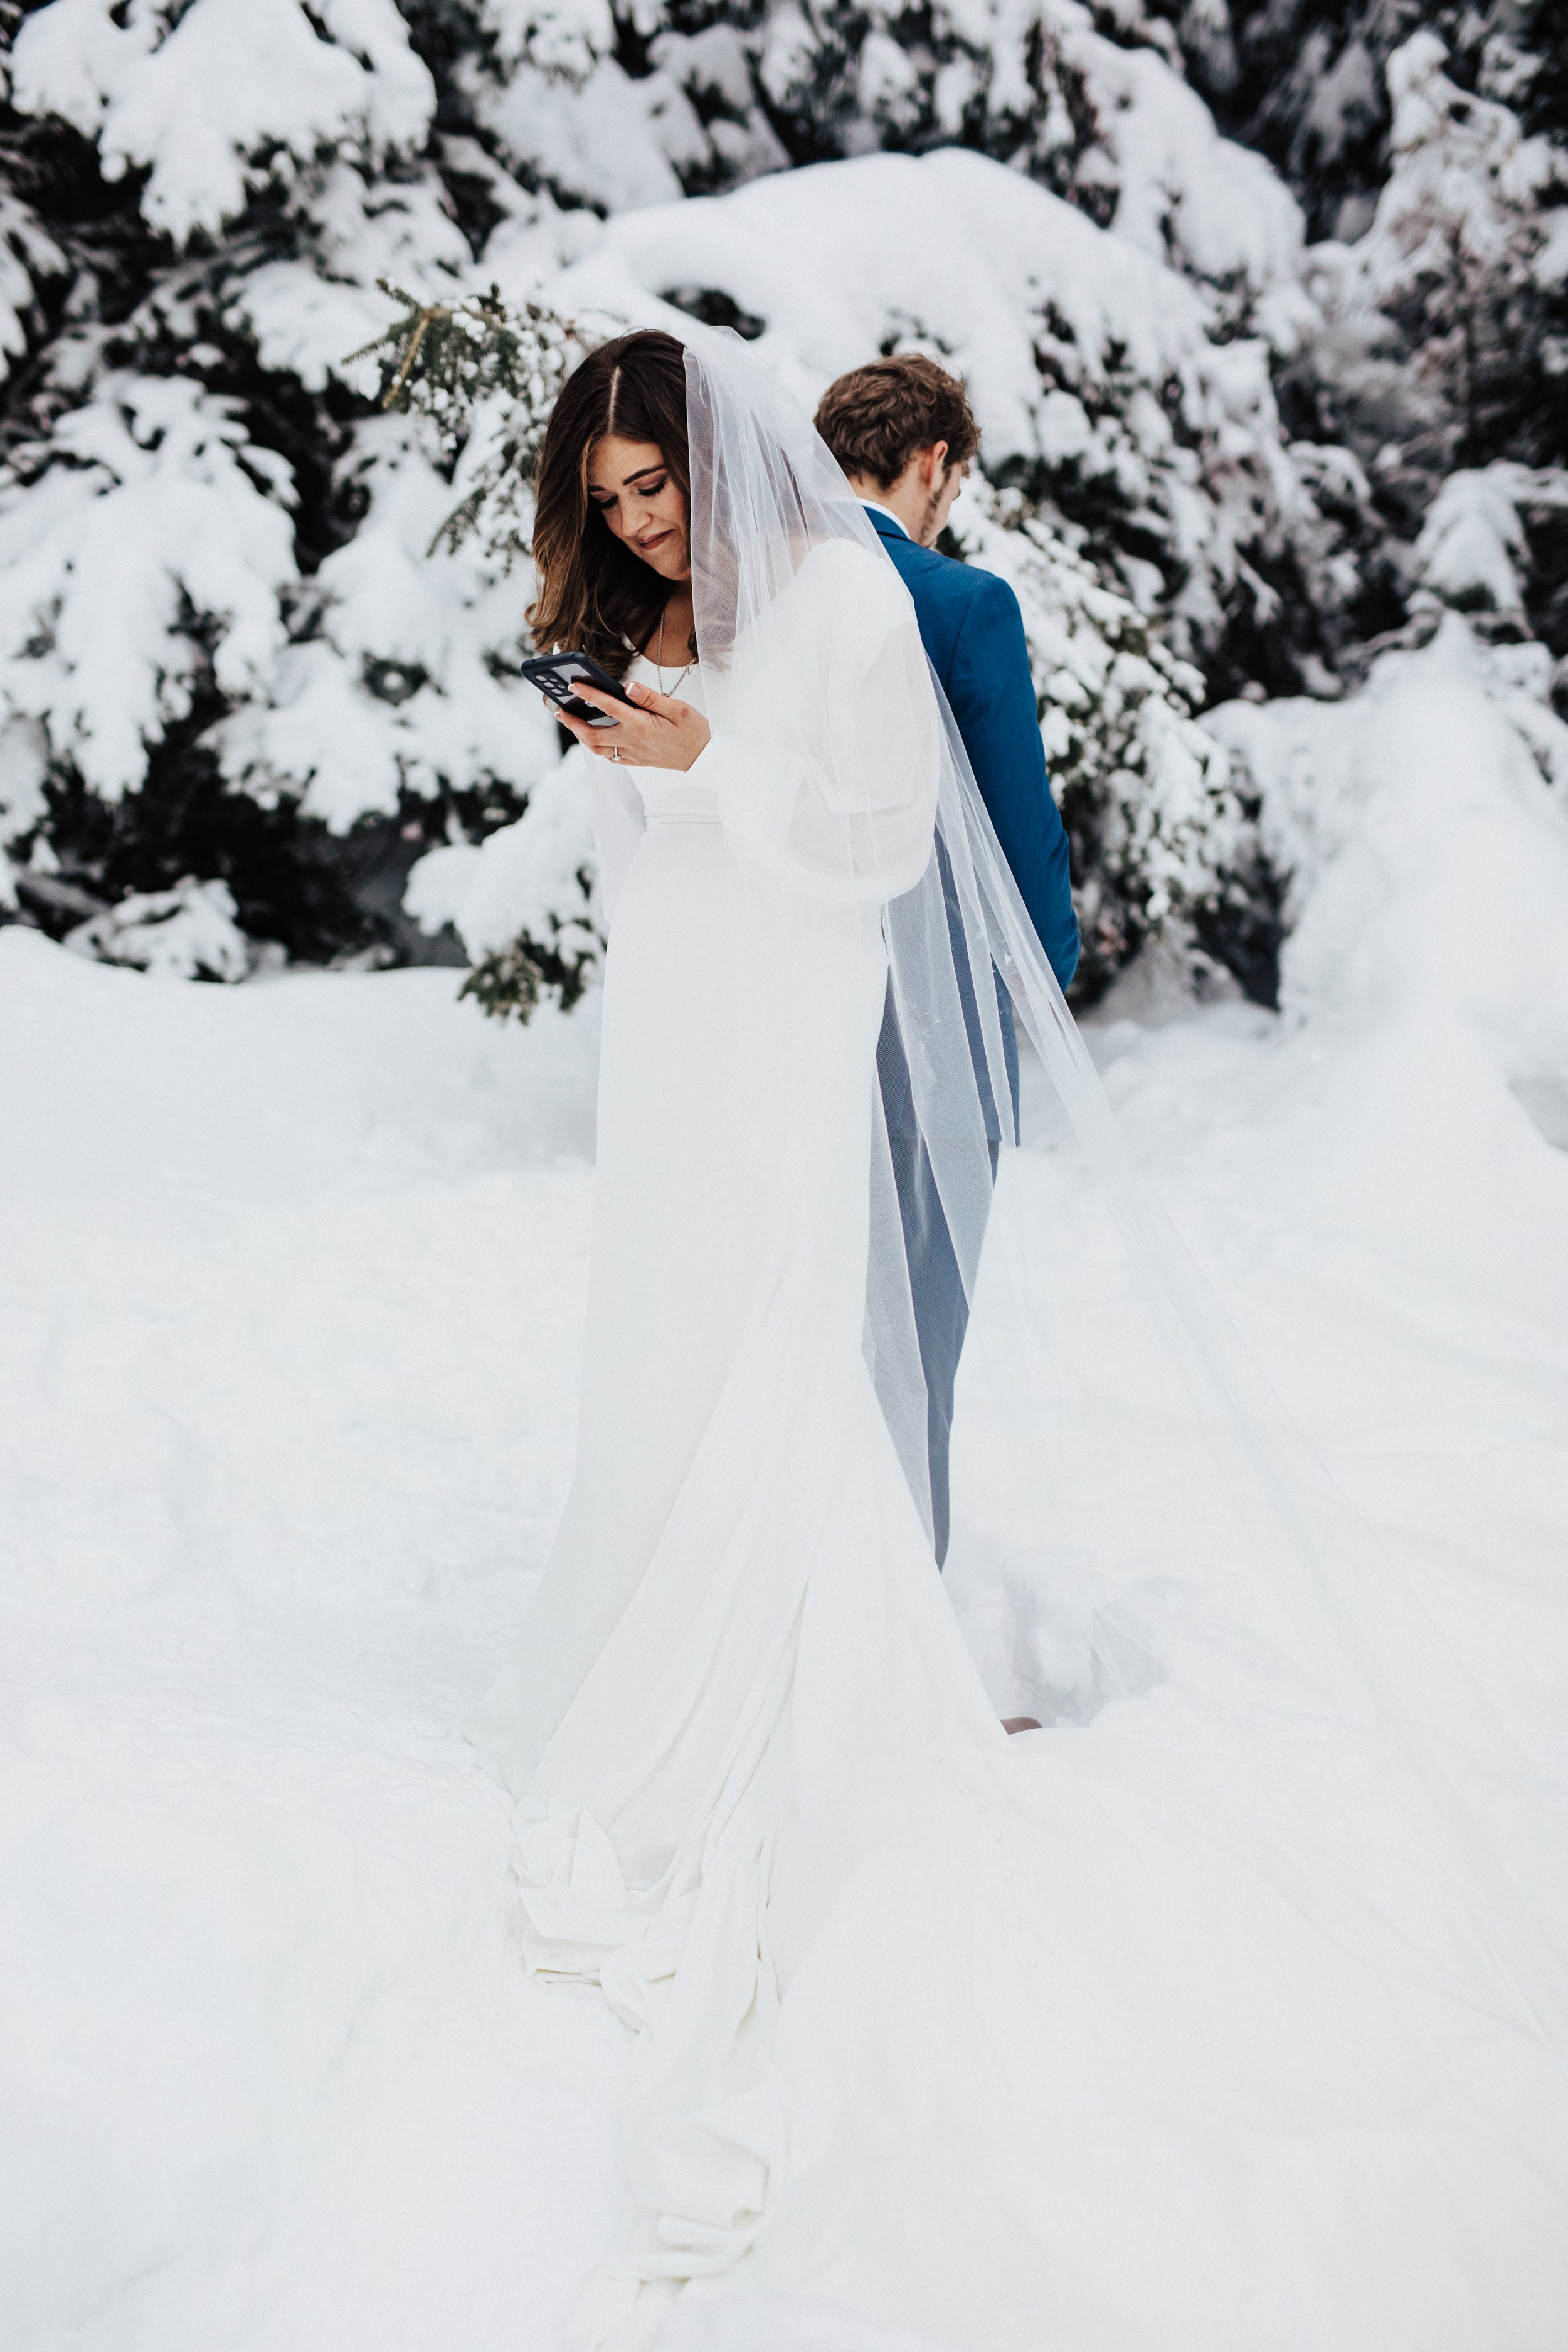 utah-mountain-winter-bridals-15.jpg